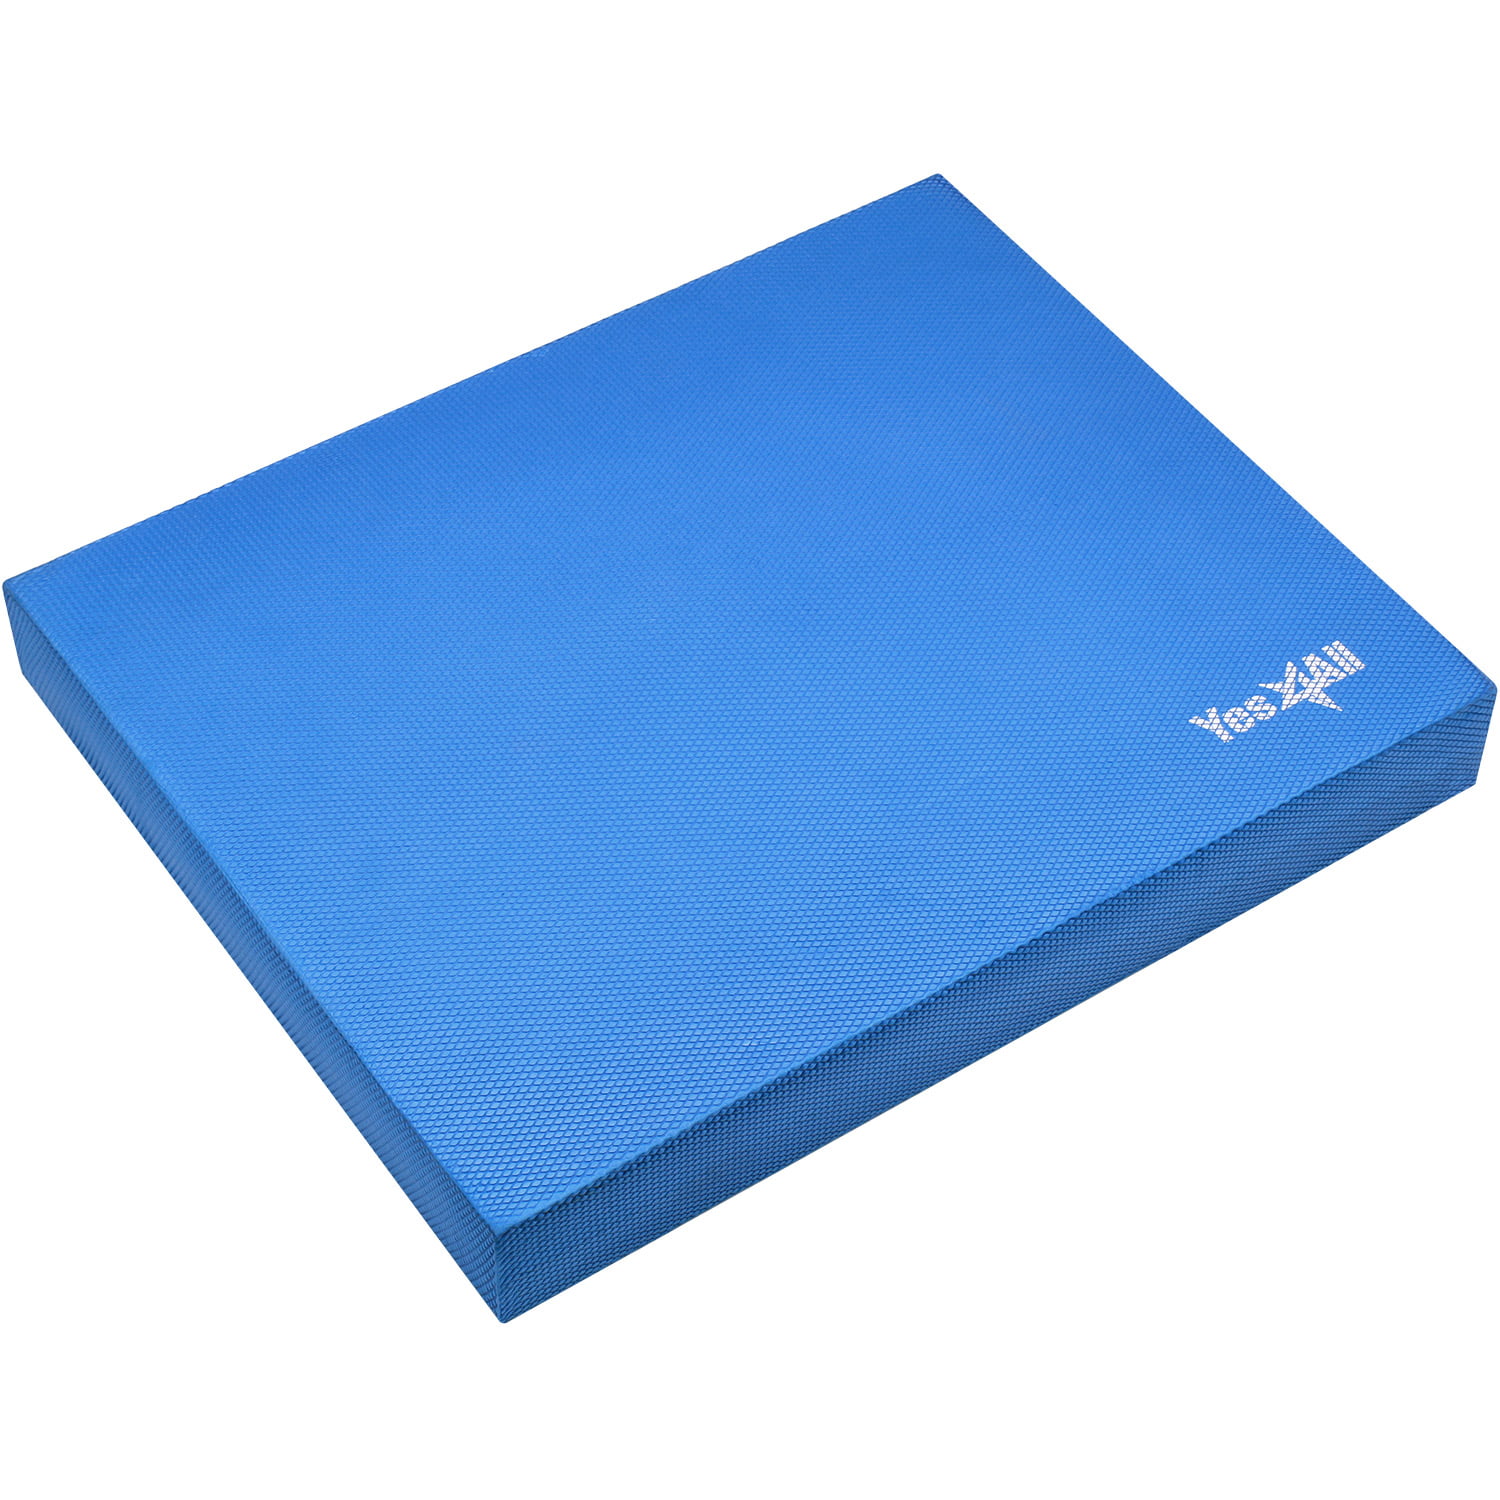 Yes4All Yoga Balance Board / Balance Foam Pad - Extra Large Foam Pad (Blue)